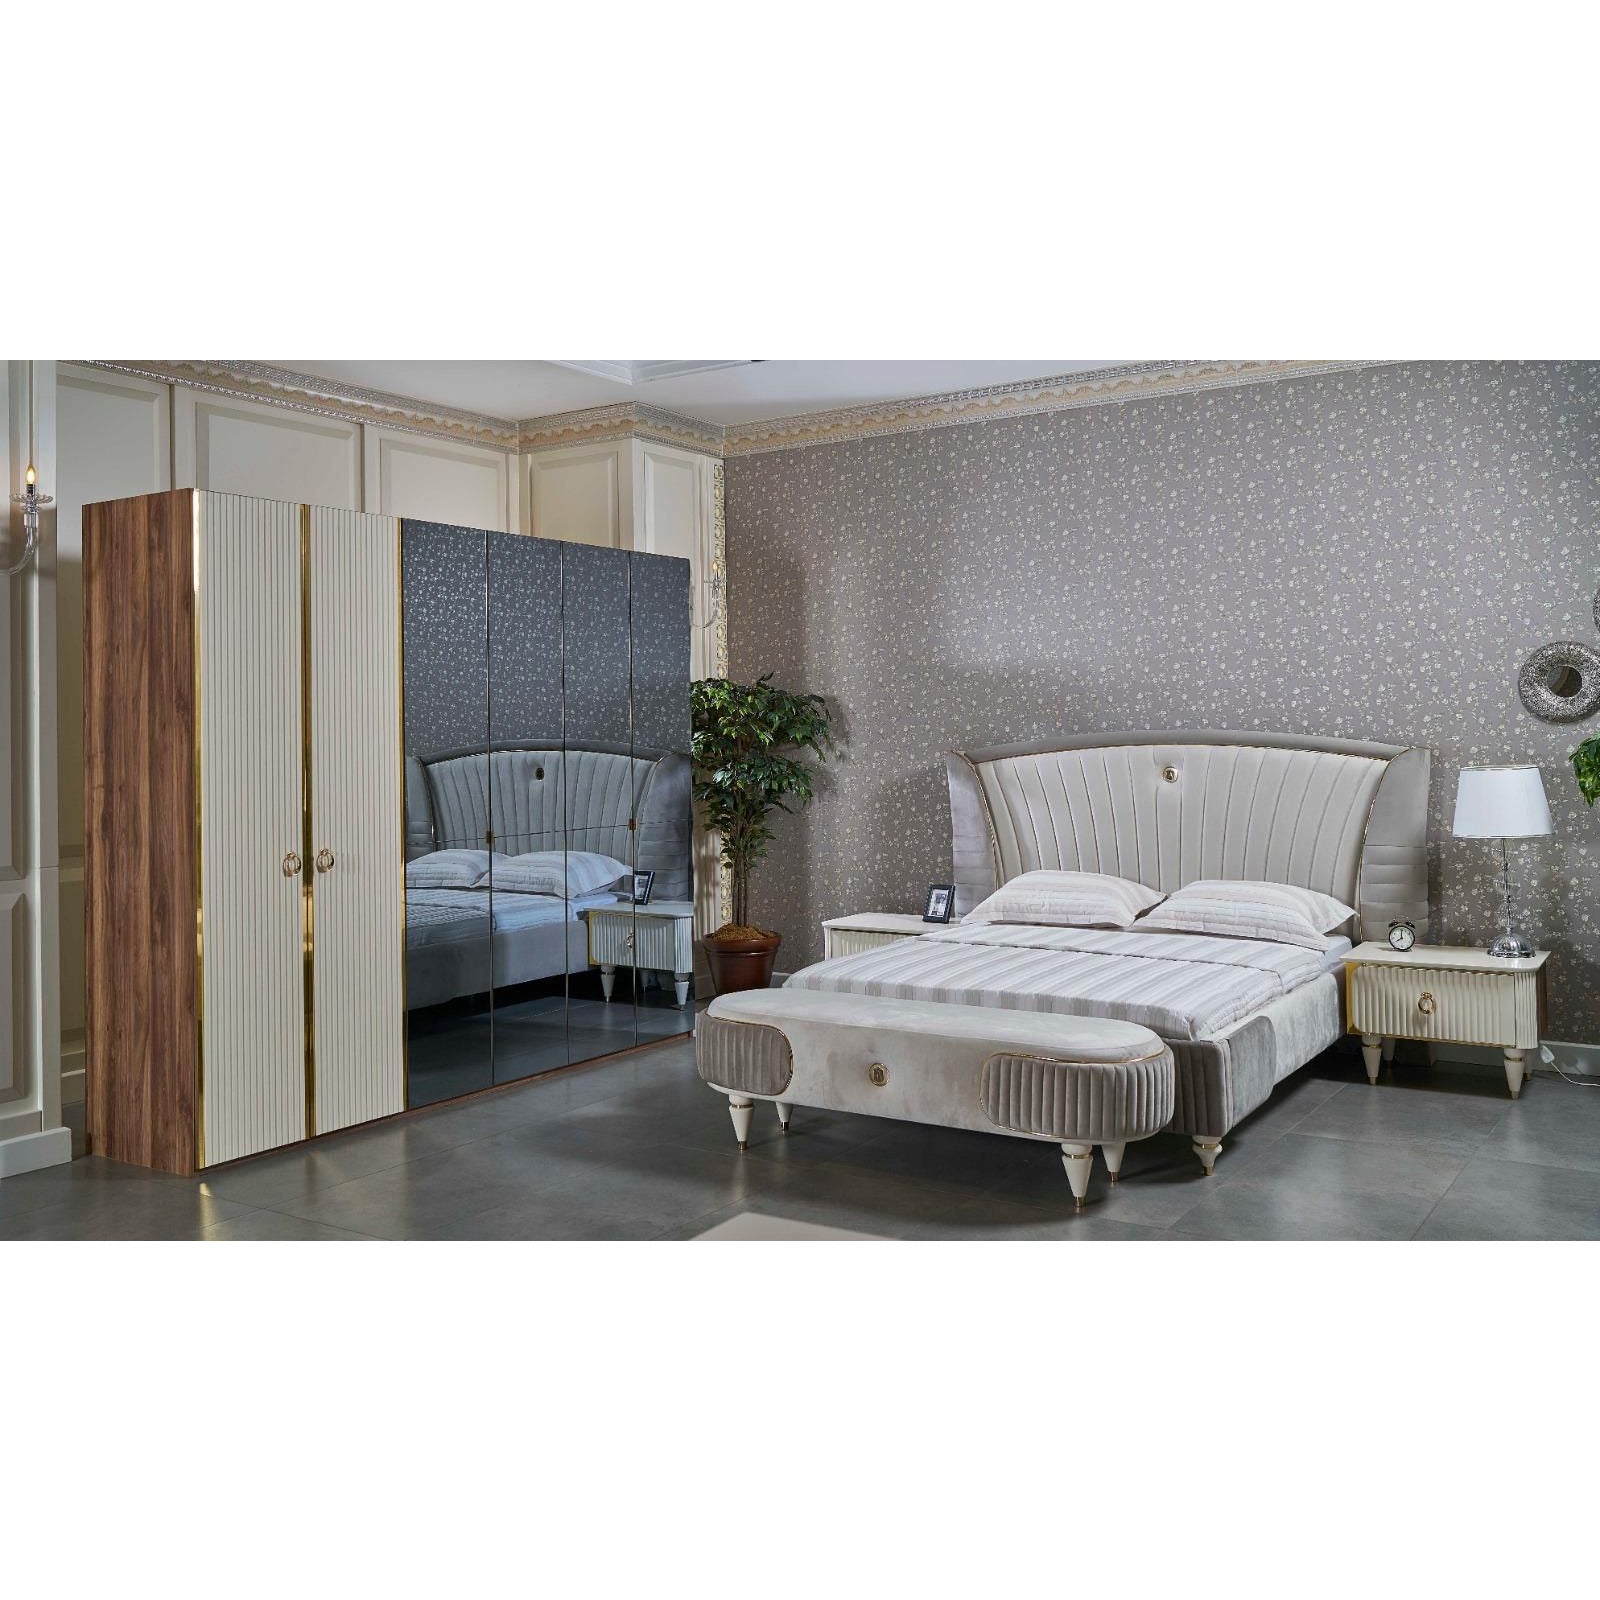 İnci Garderob - LINE Furniture Group